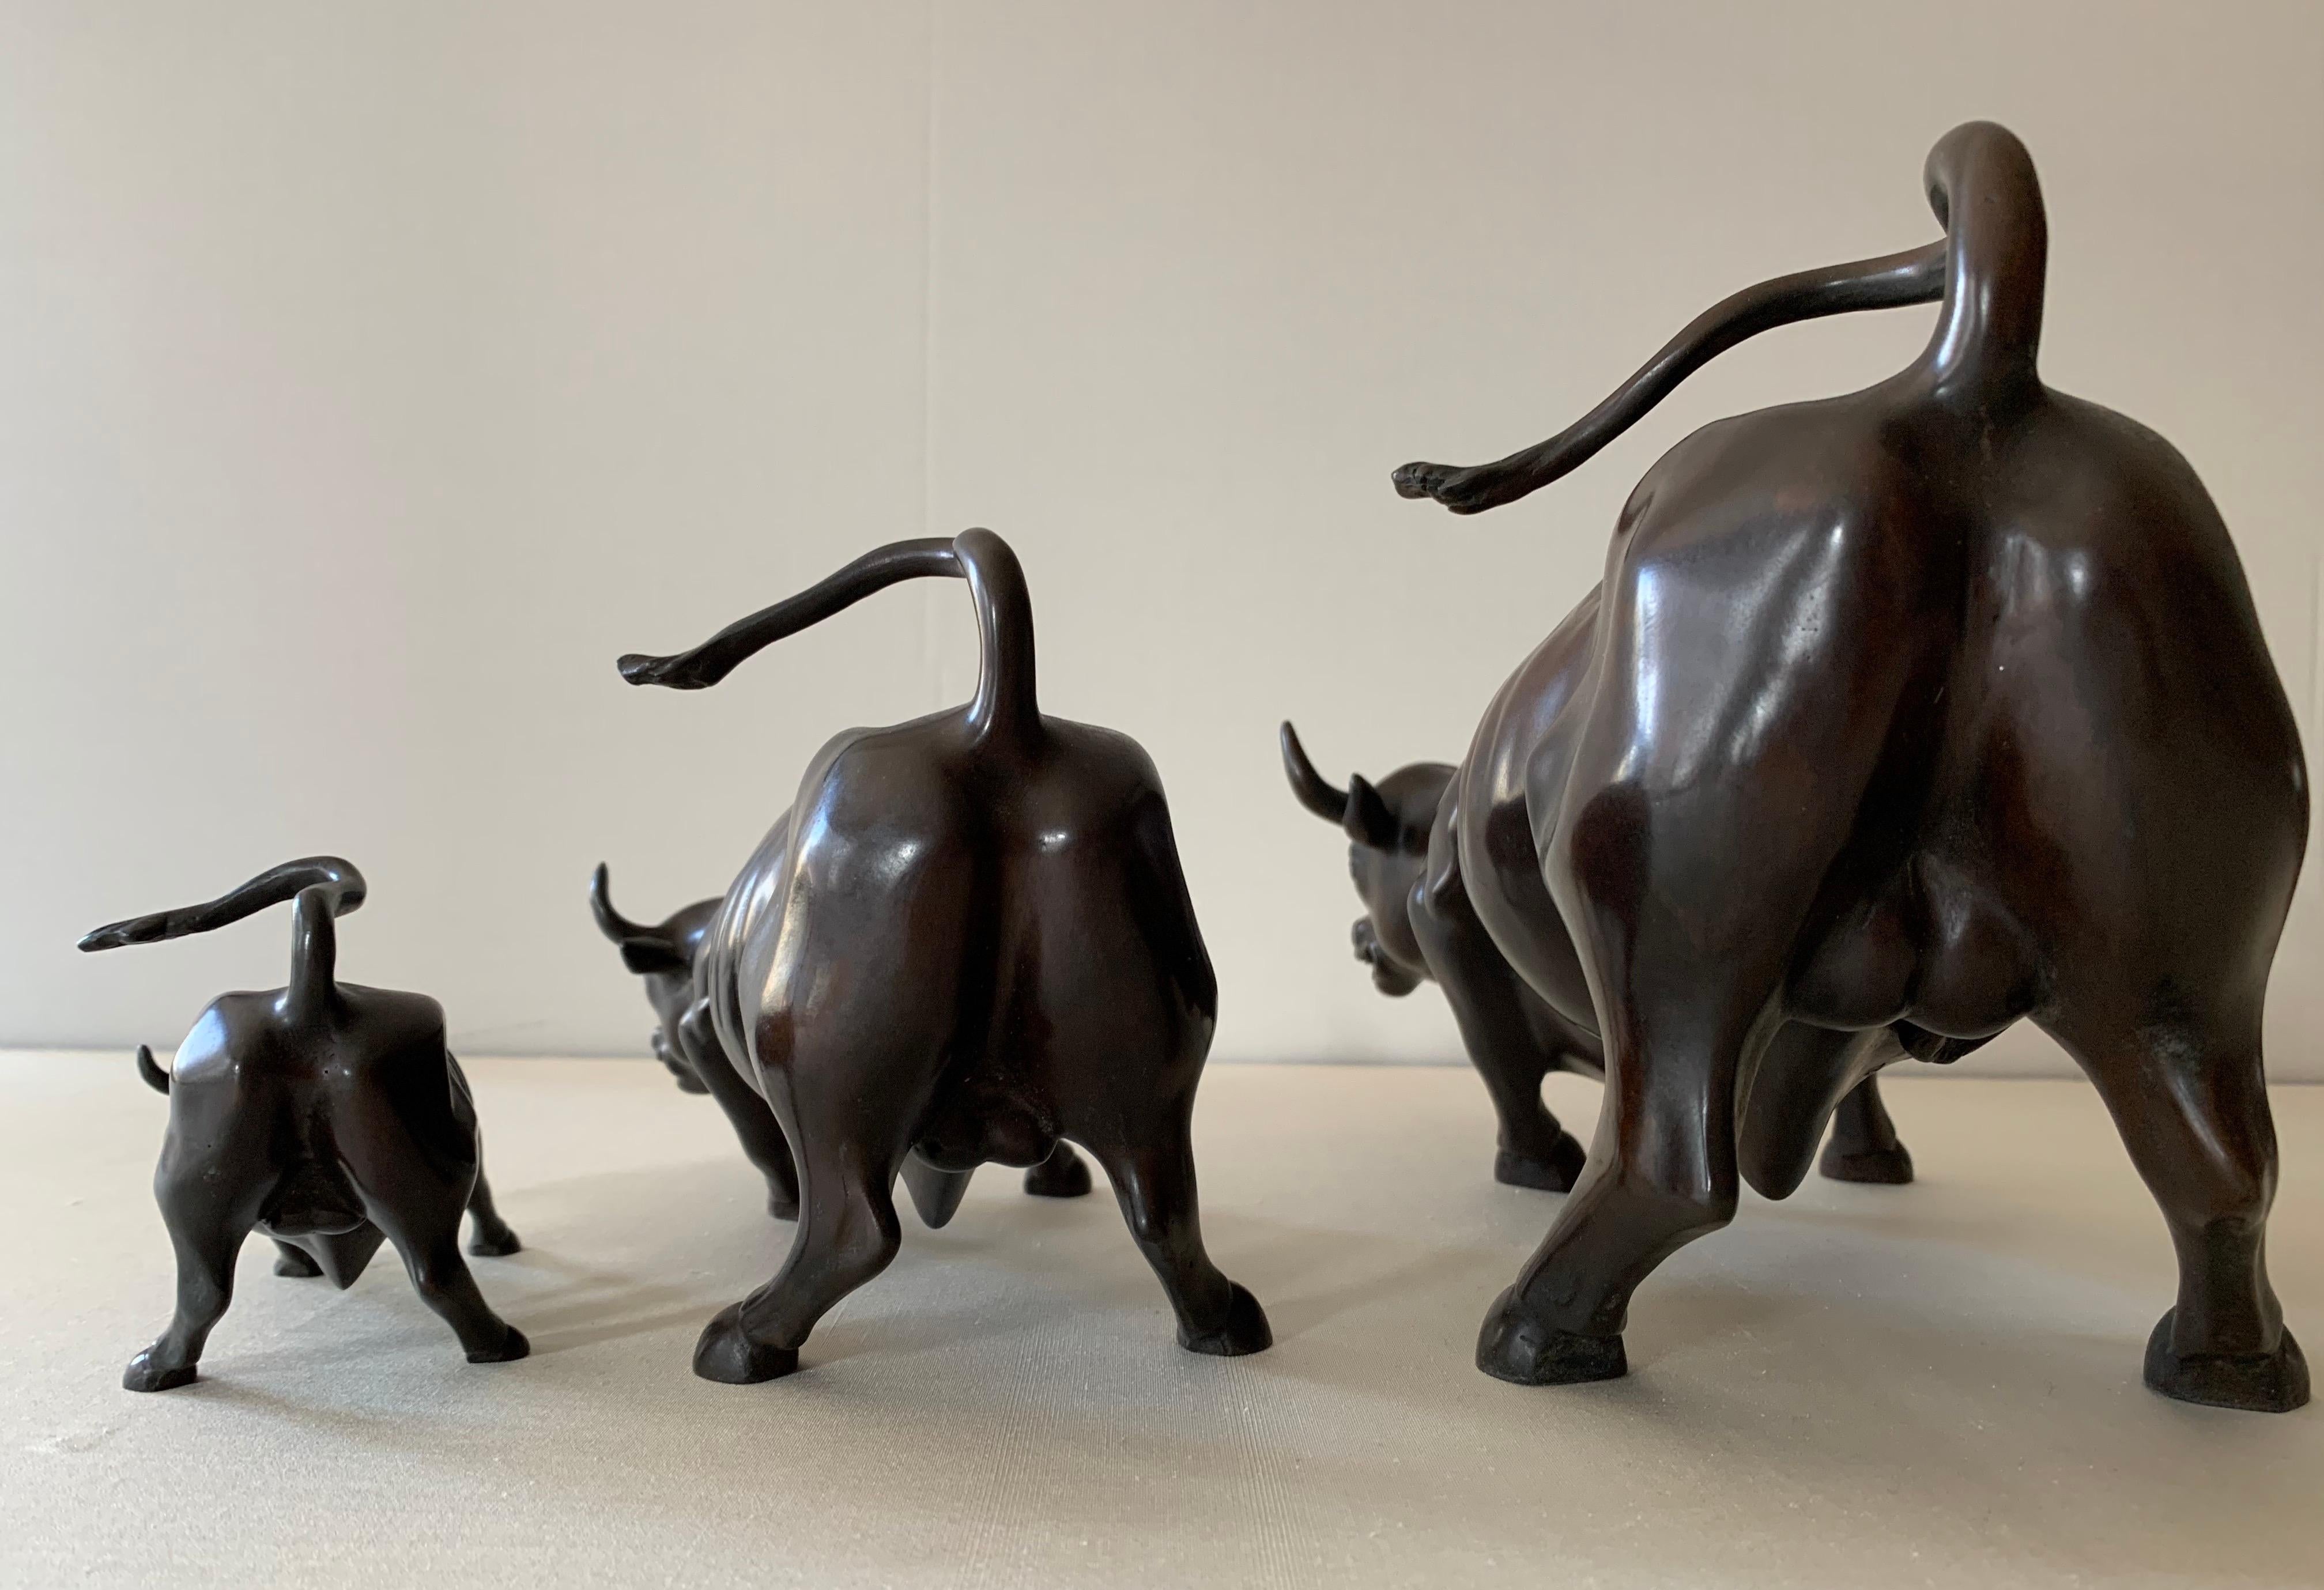 Sculptures de taureau de rue de Wall Street en bronze (série de 3) - Or Figurative Sculpture par Arturo Di Modica